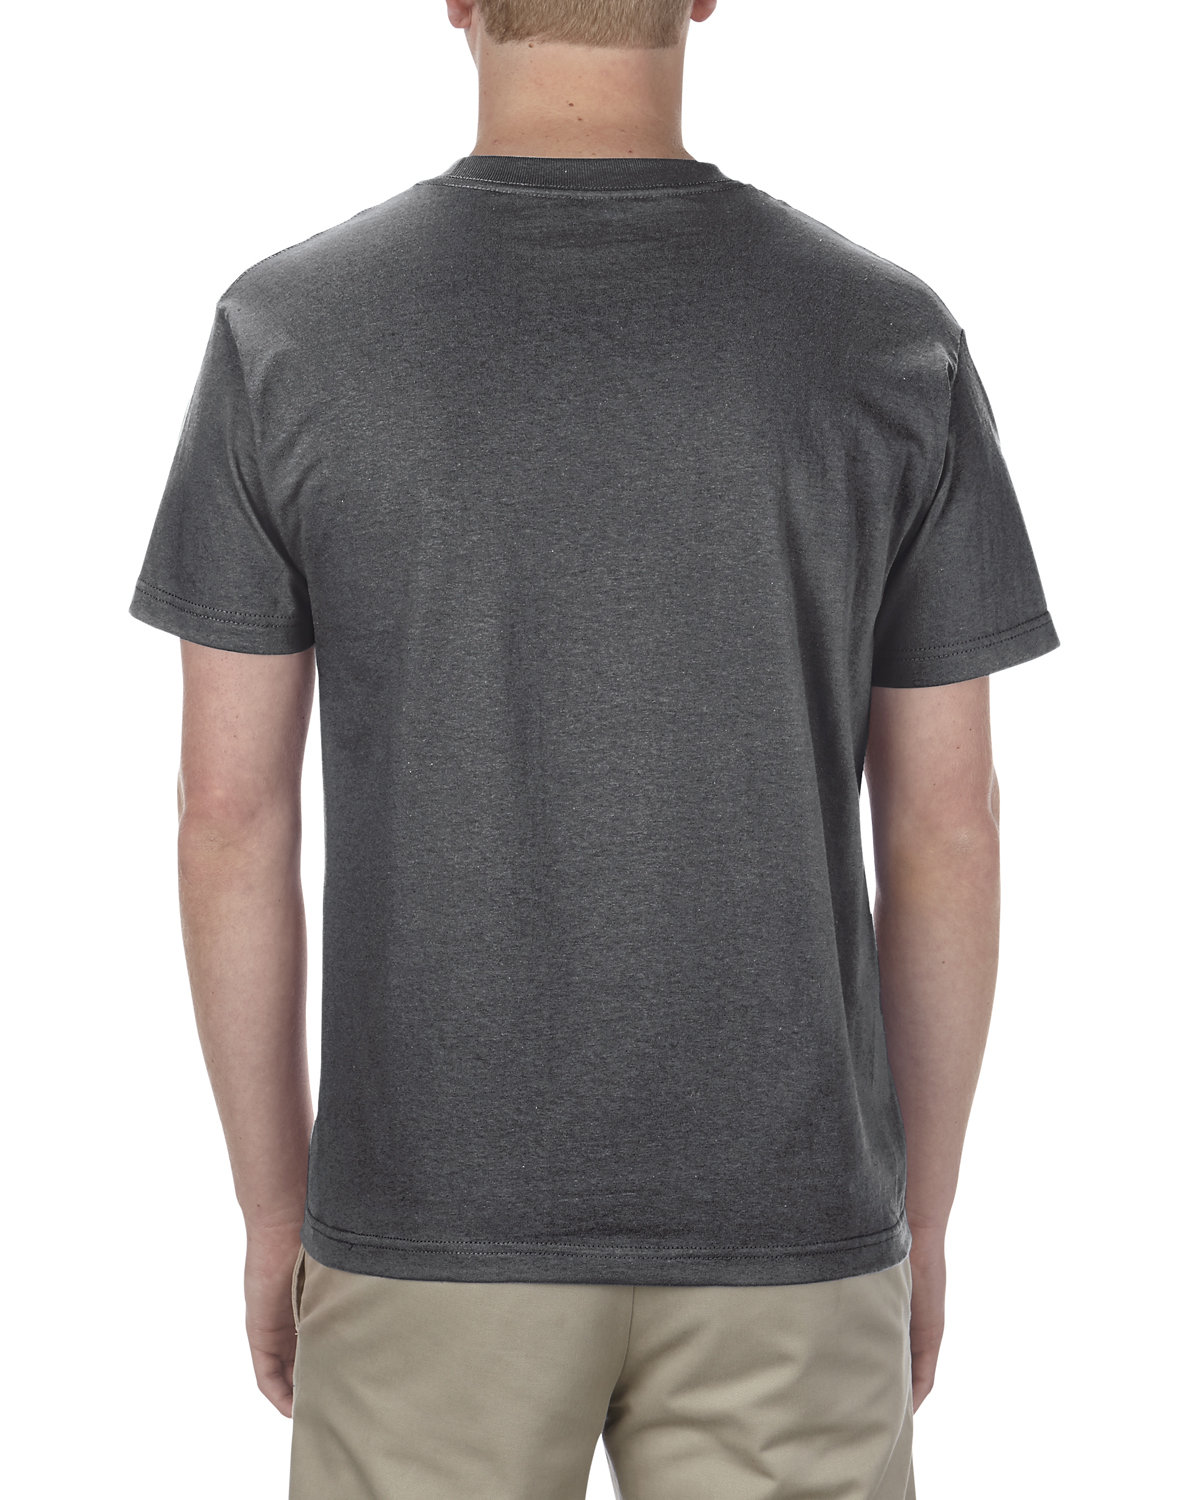 American Apparel Unisex Heavyweight Cotton T-Shirt | alphabroder Canada